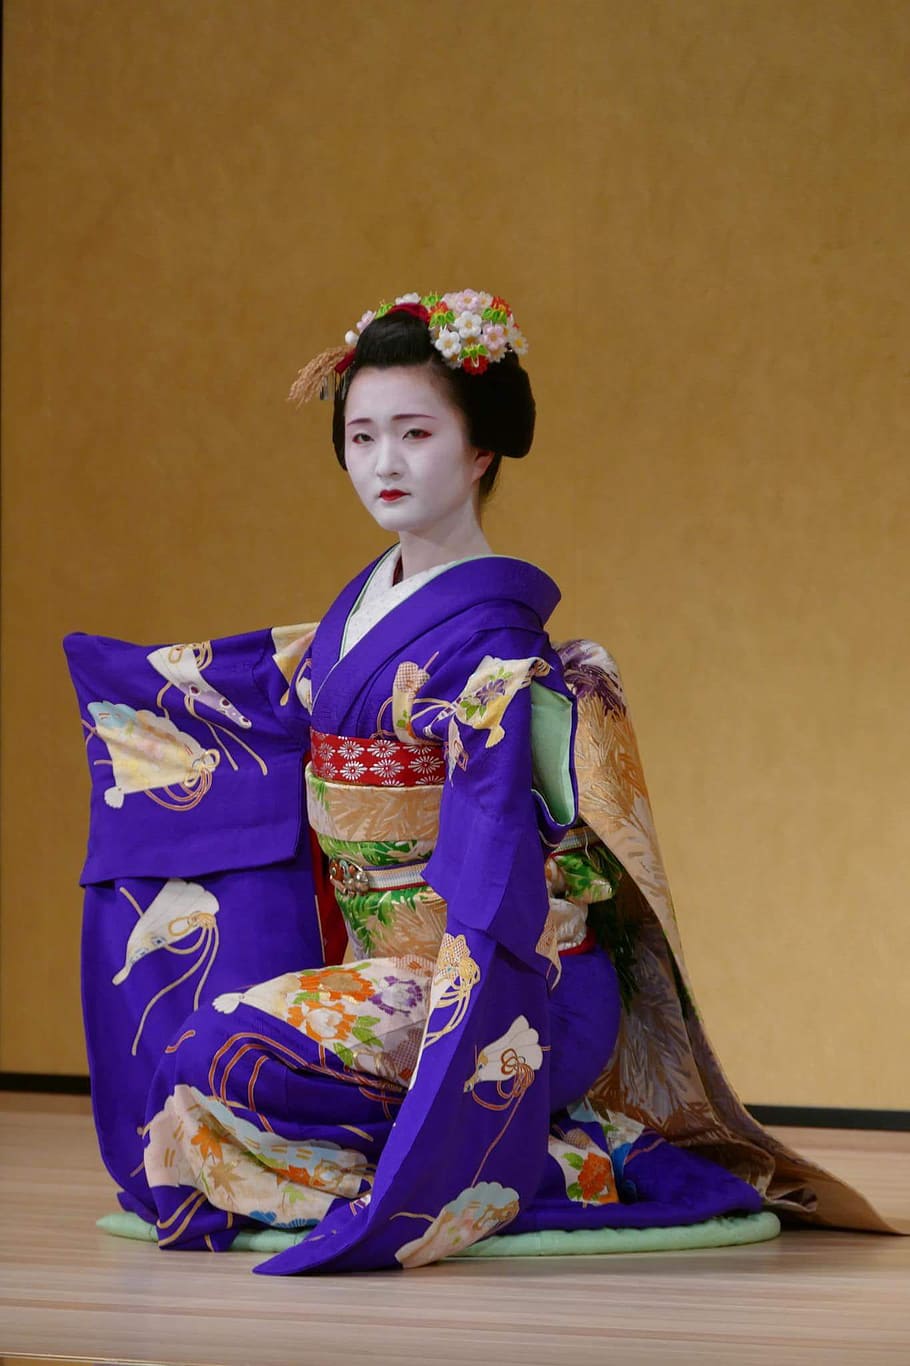 kimono, adulto, gente, ropa, disfraz, adentro, una persona, vista frontal, vestimenta tradicional, vestimenta